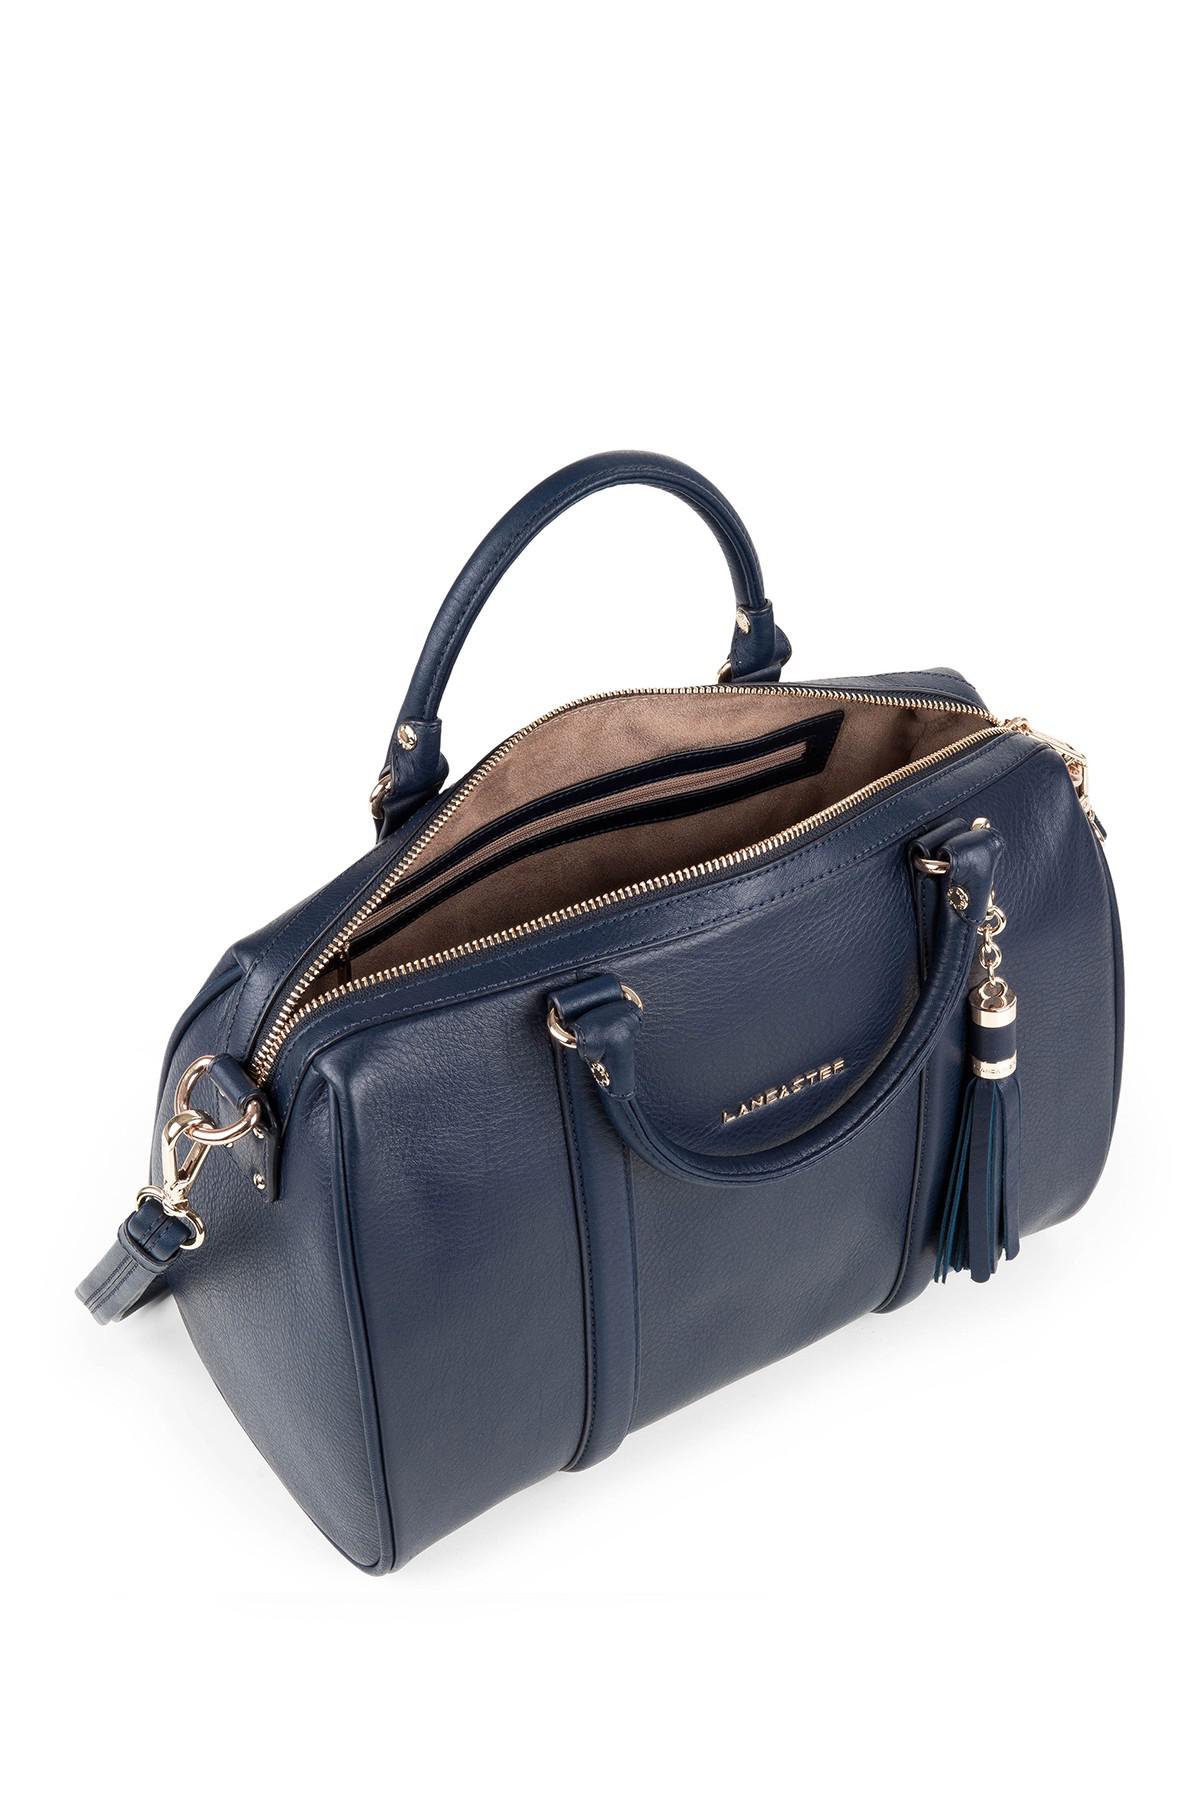 Lancaster Paris Leather Large Mademoiselle Ana Handbag in Dark Blue (Blue) - Lyst